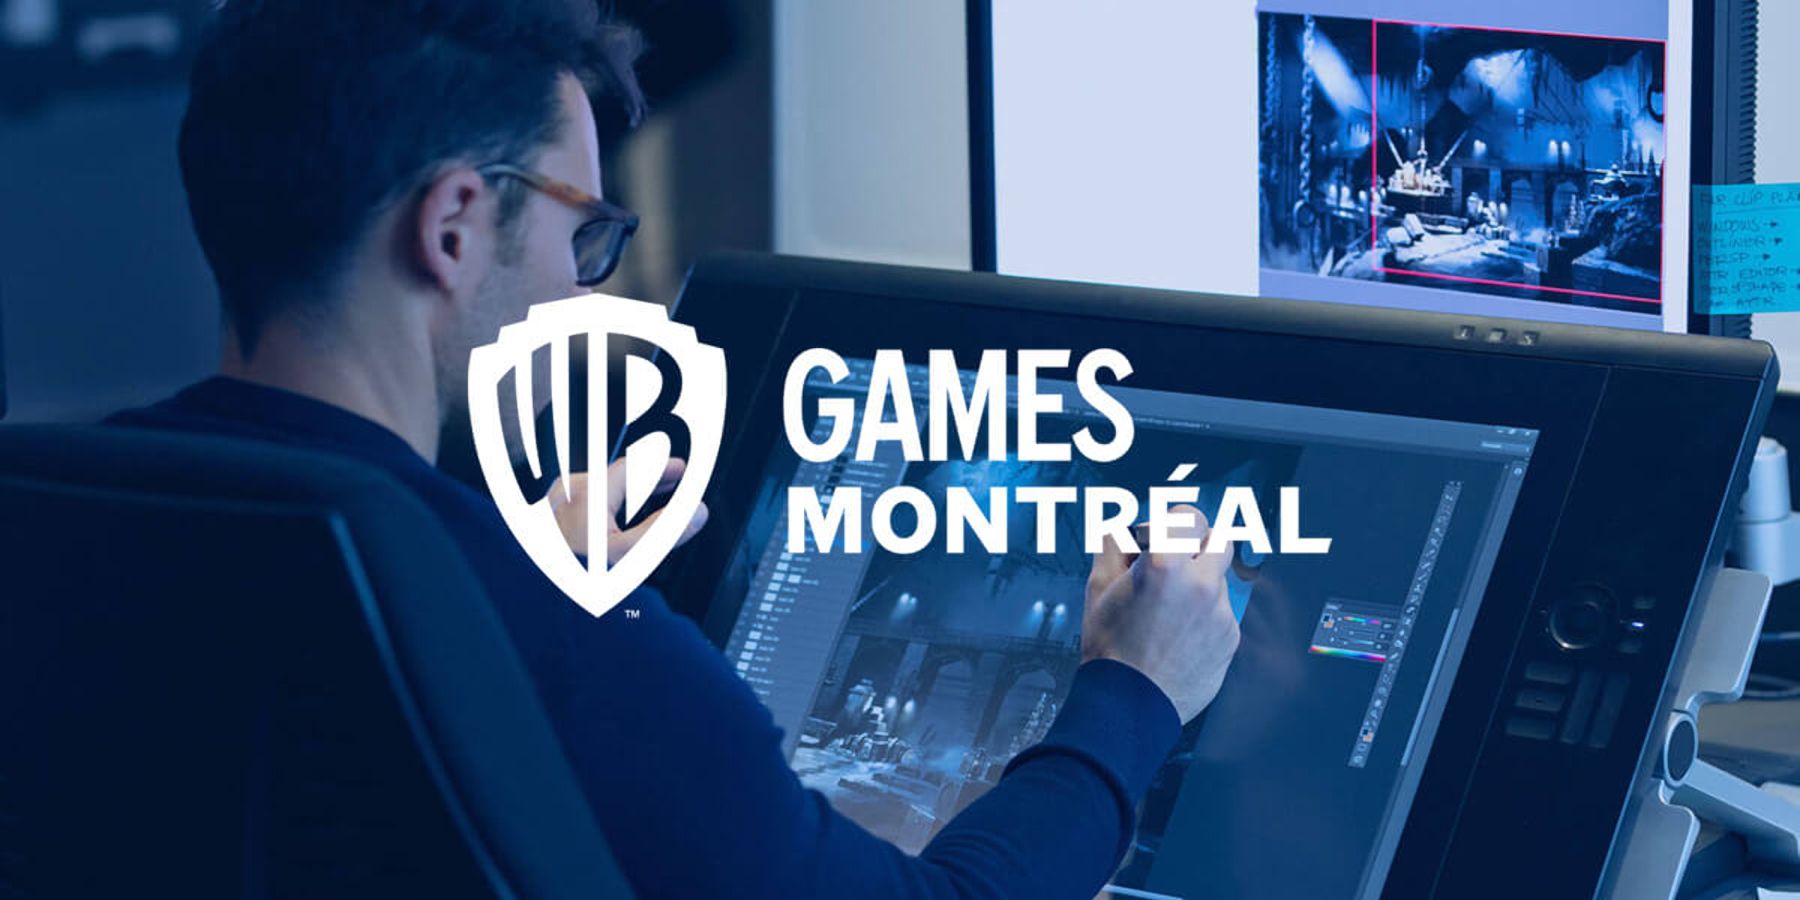 لوگوی استودیوی WB Games Montreal